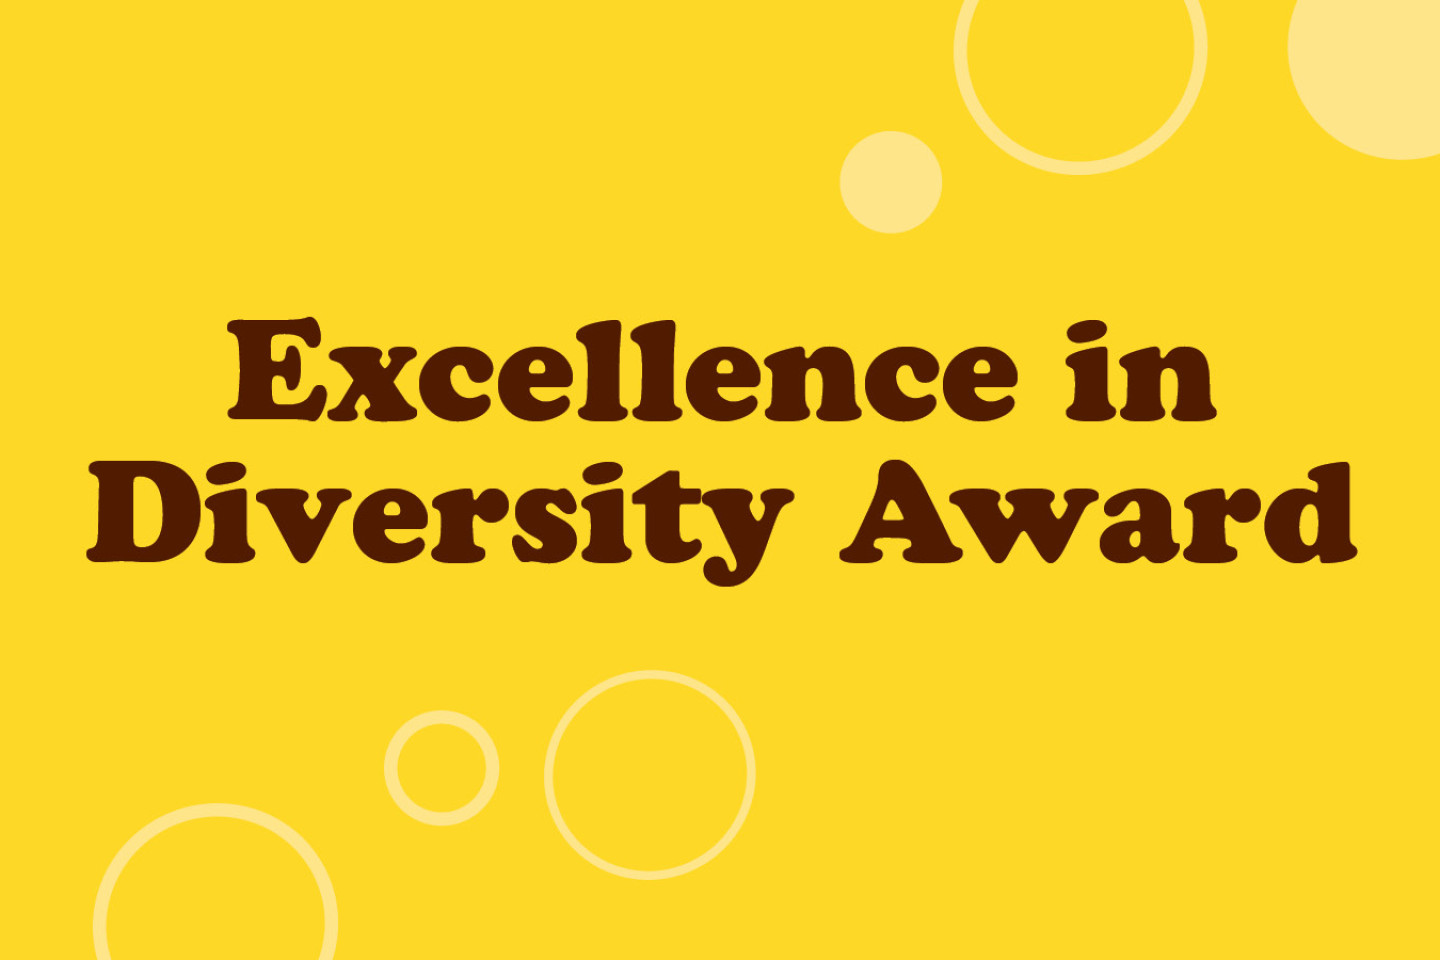 Excellence in Diversity Award logo